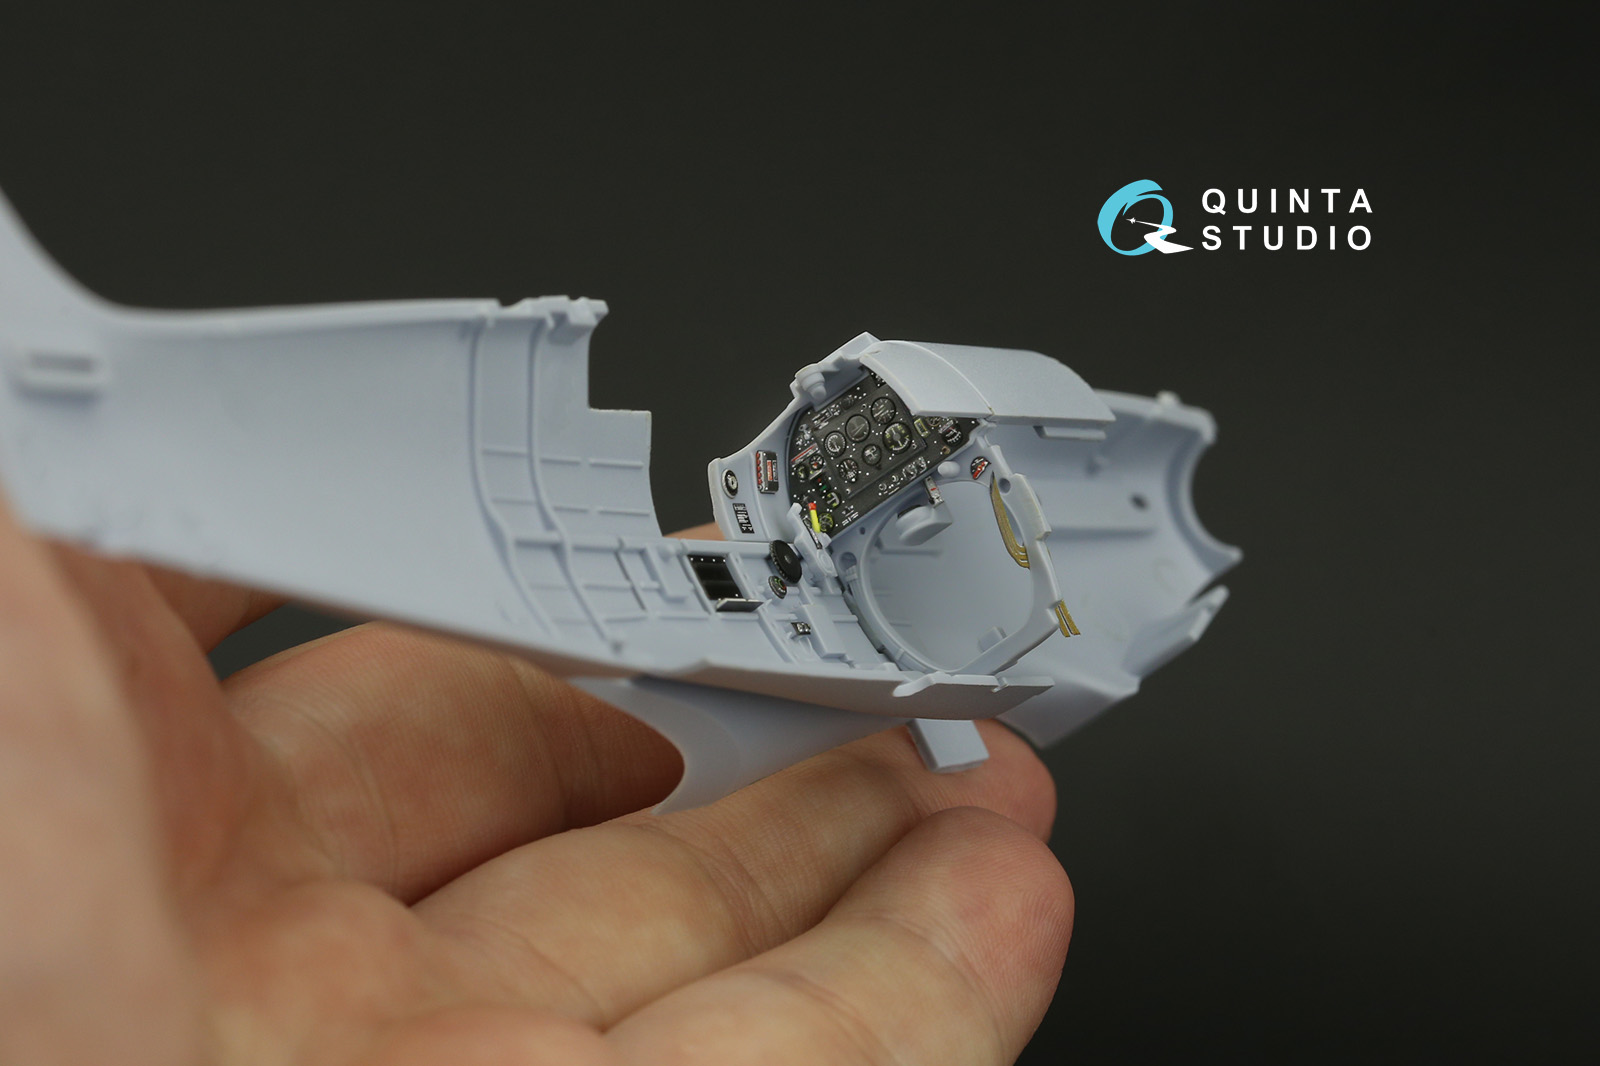 3D Декали интерьера Spitfire Mk.V от компании Quinta Studio